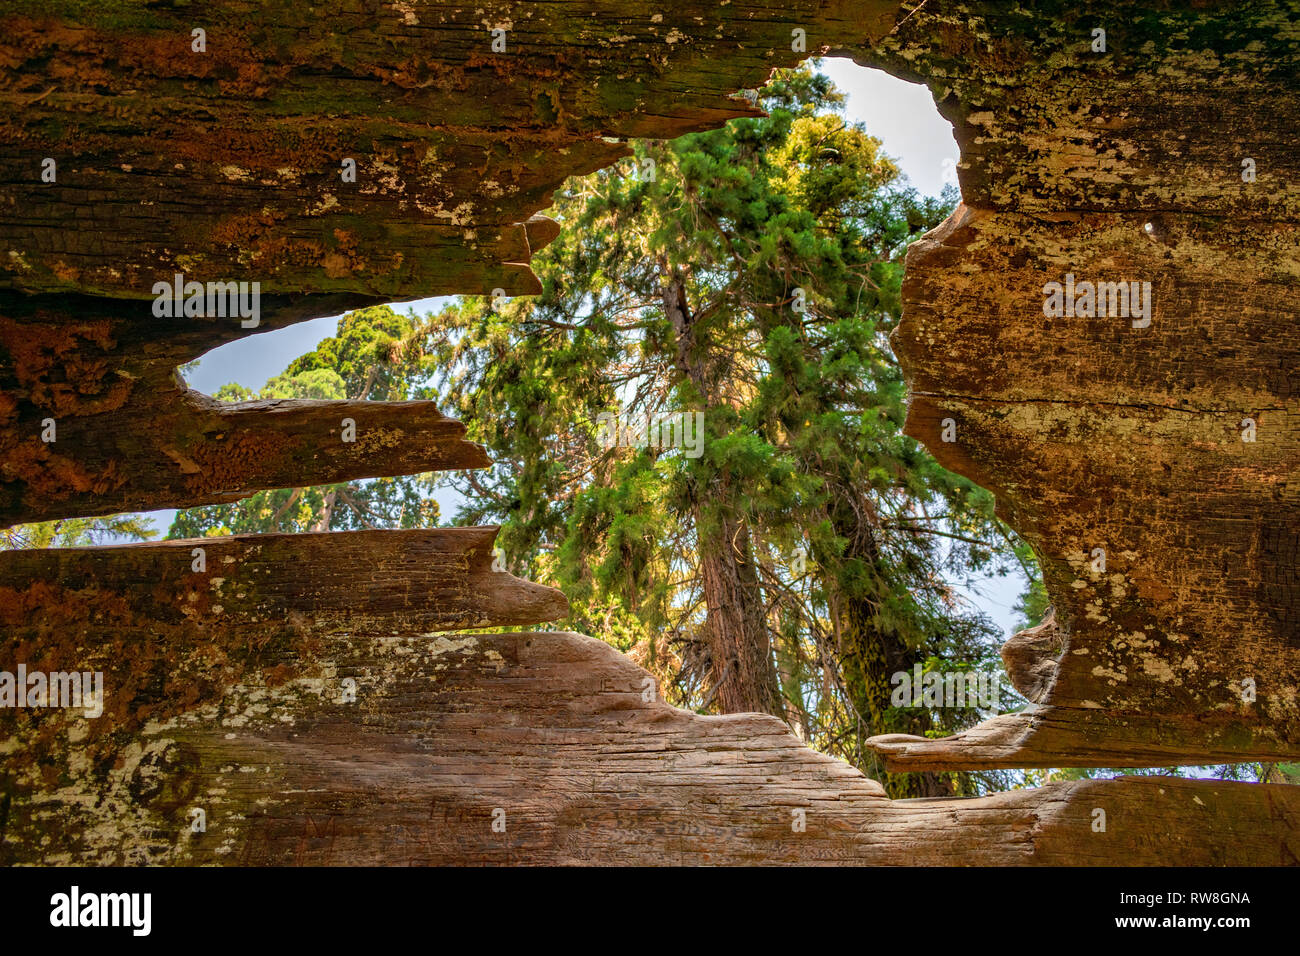 Giant sequoia (Sequoiadendron giganteum) visible through the hole in hollow fallen tree trunk Stock Photo